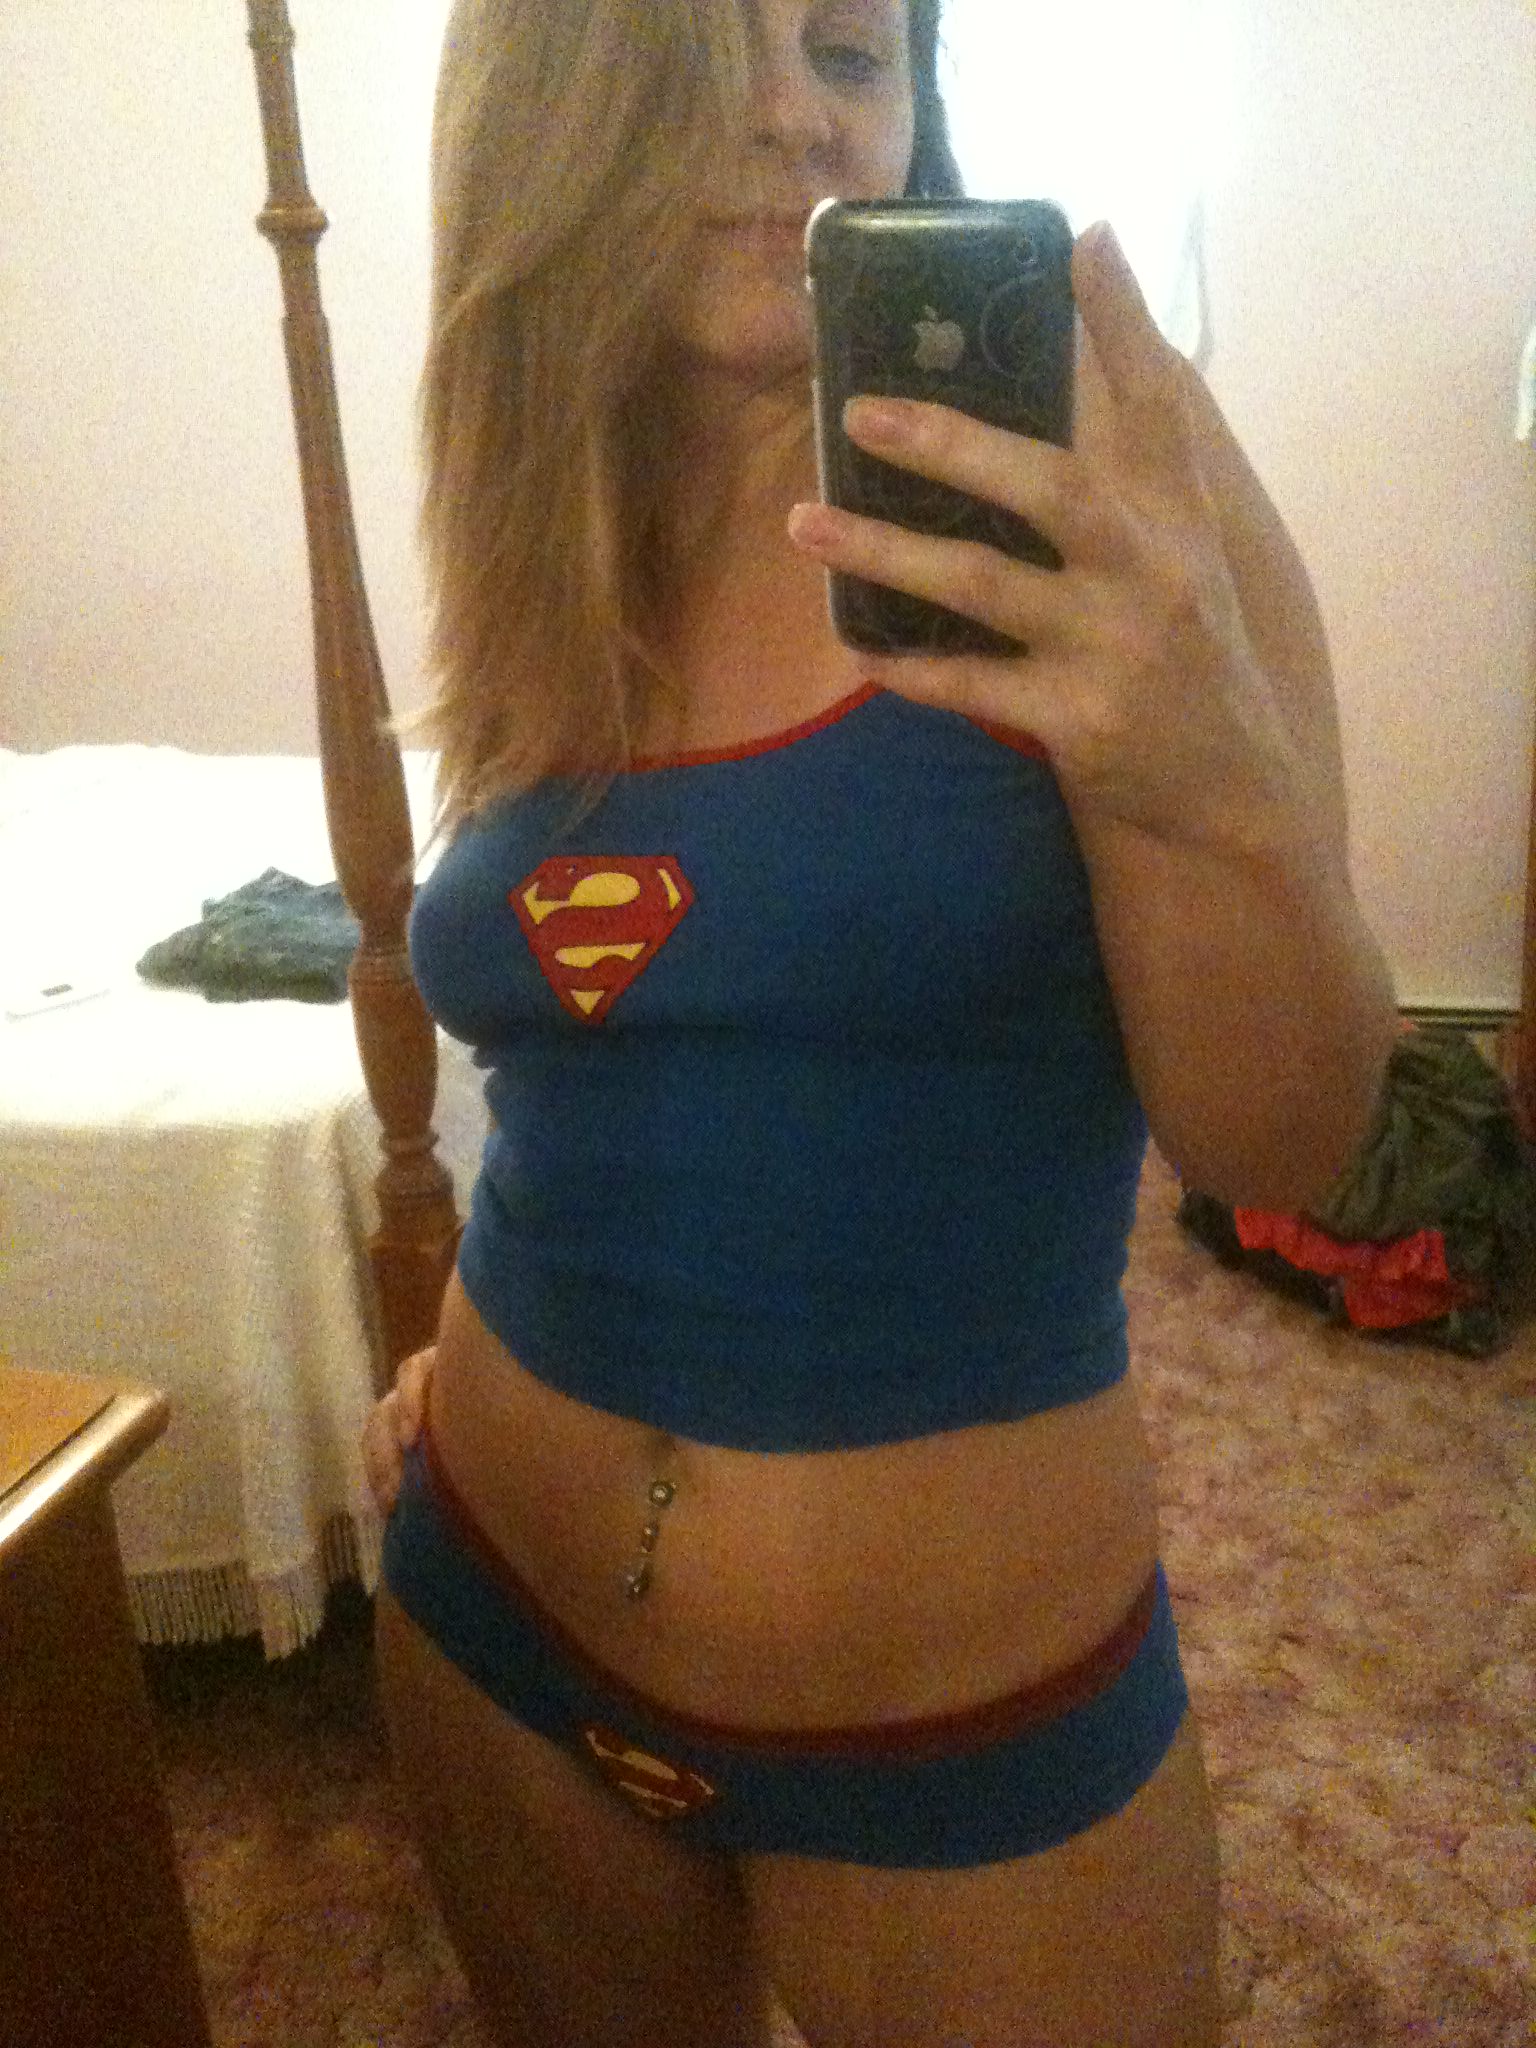 Supergirl Porno Photo Eporner